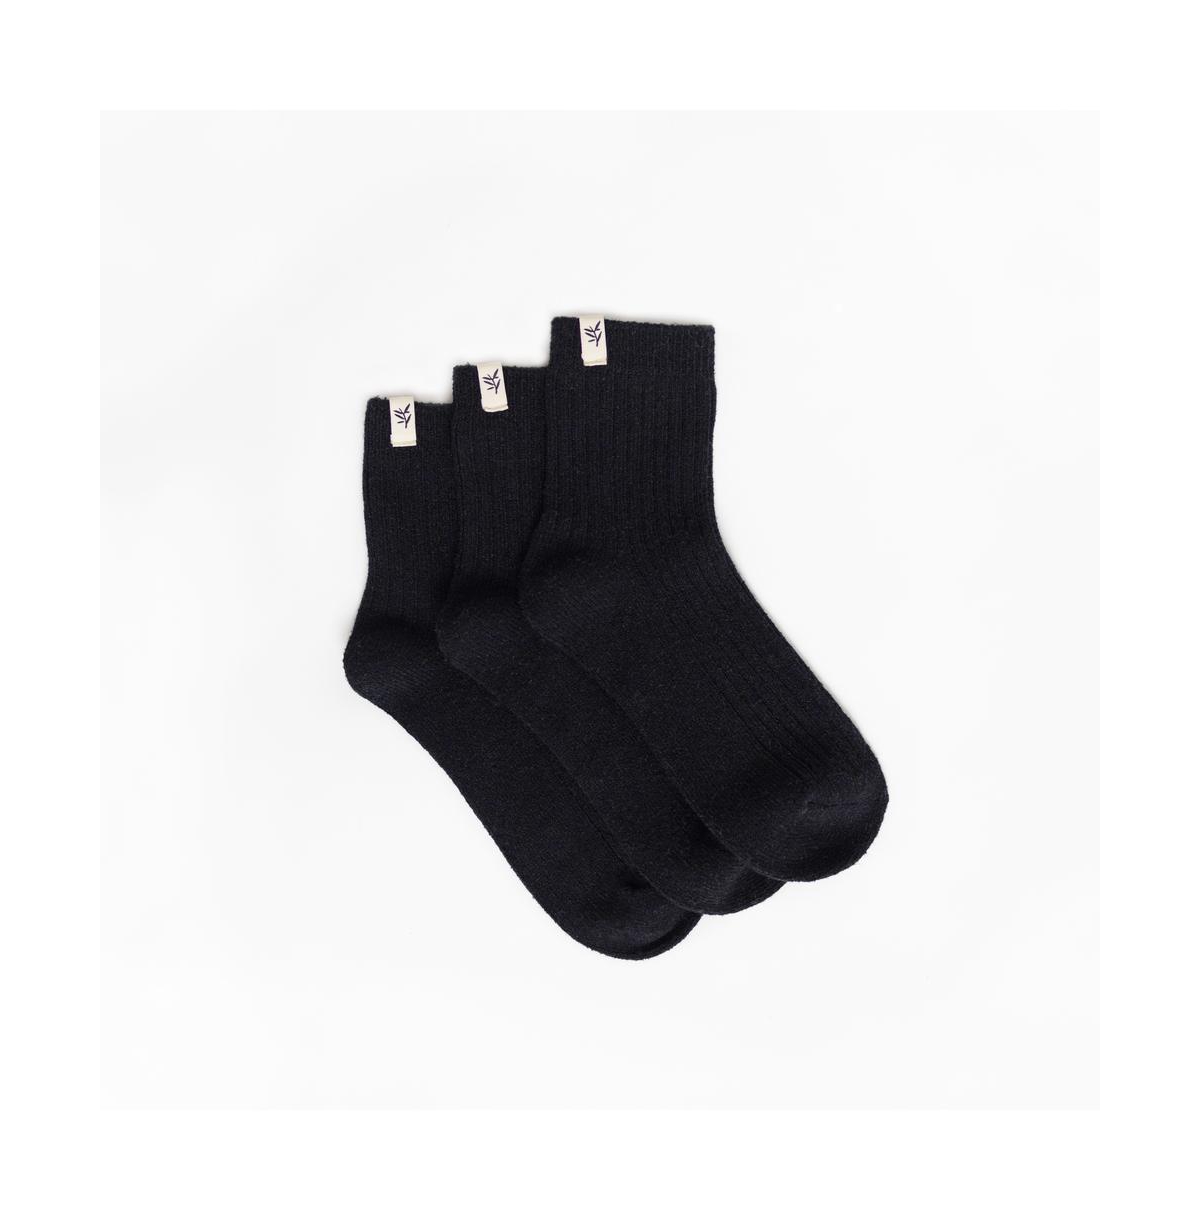 Modern Crew Cut Socks for Women - Almond